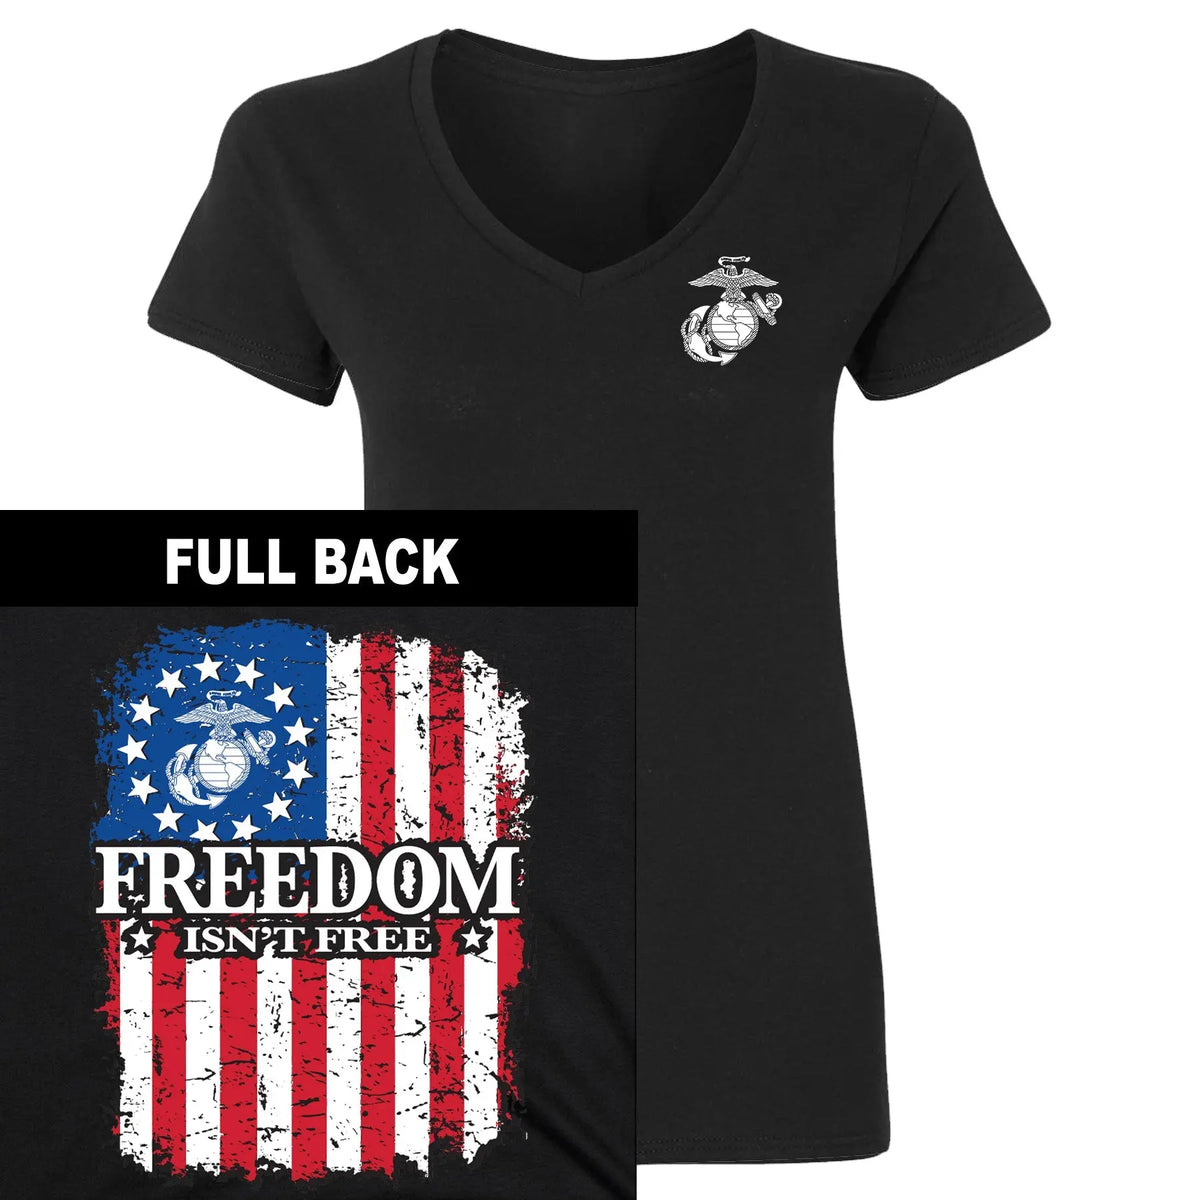 Freedom Isn't Free 2-Sided Women's V-Neck Tee